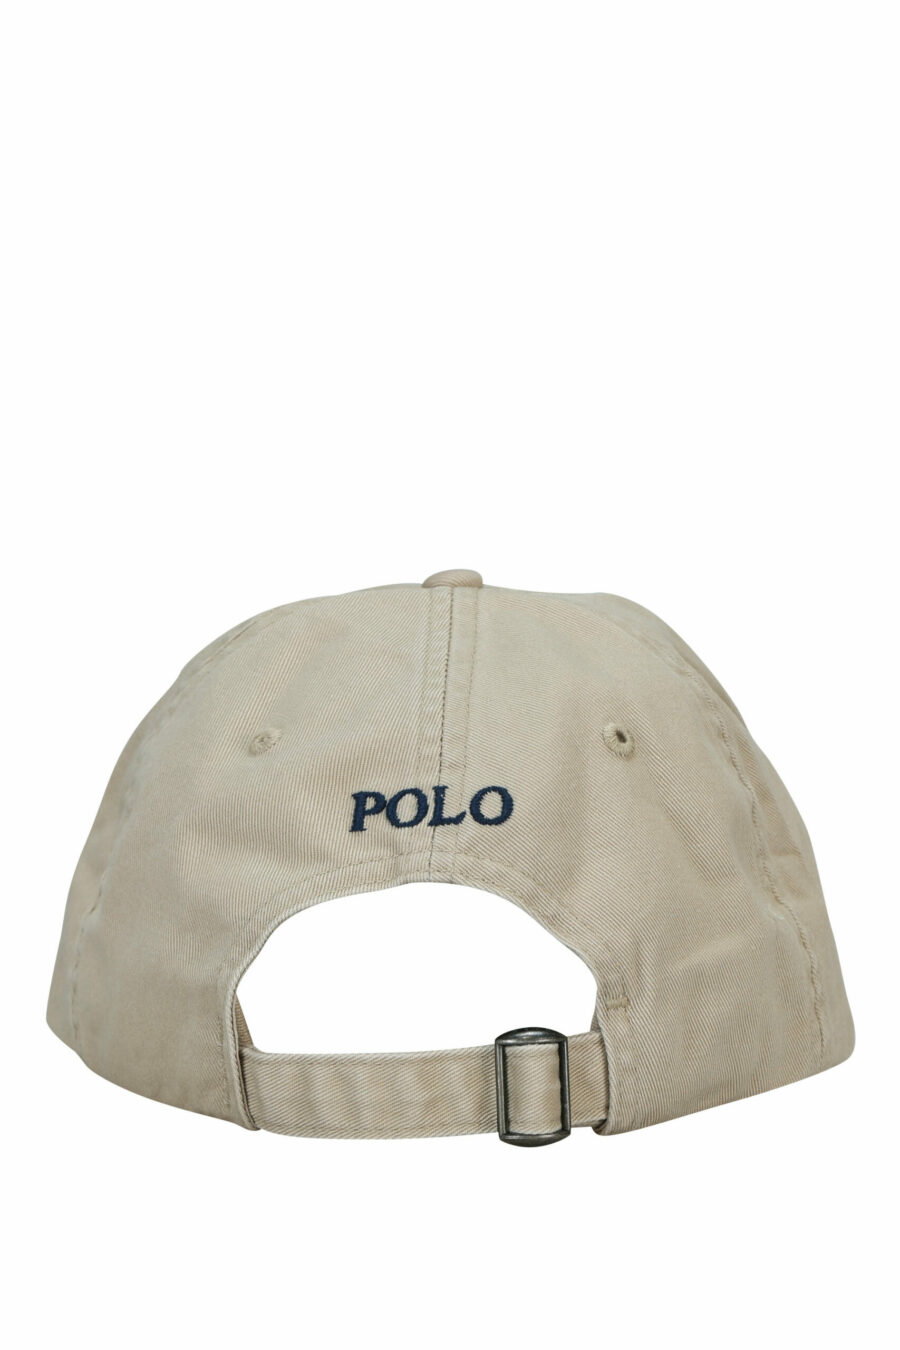 Beige Mütze mit Mini-Logo "Polo" - 3611581319114 1 skaliert